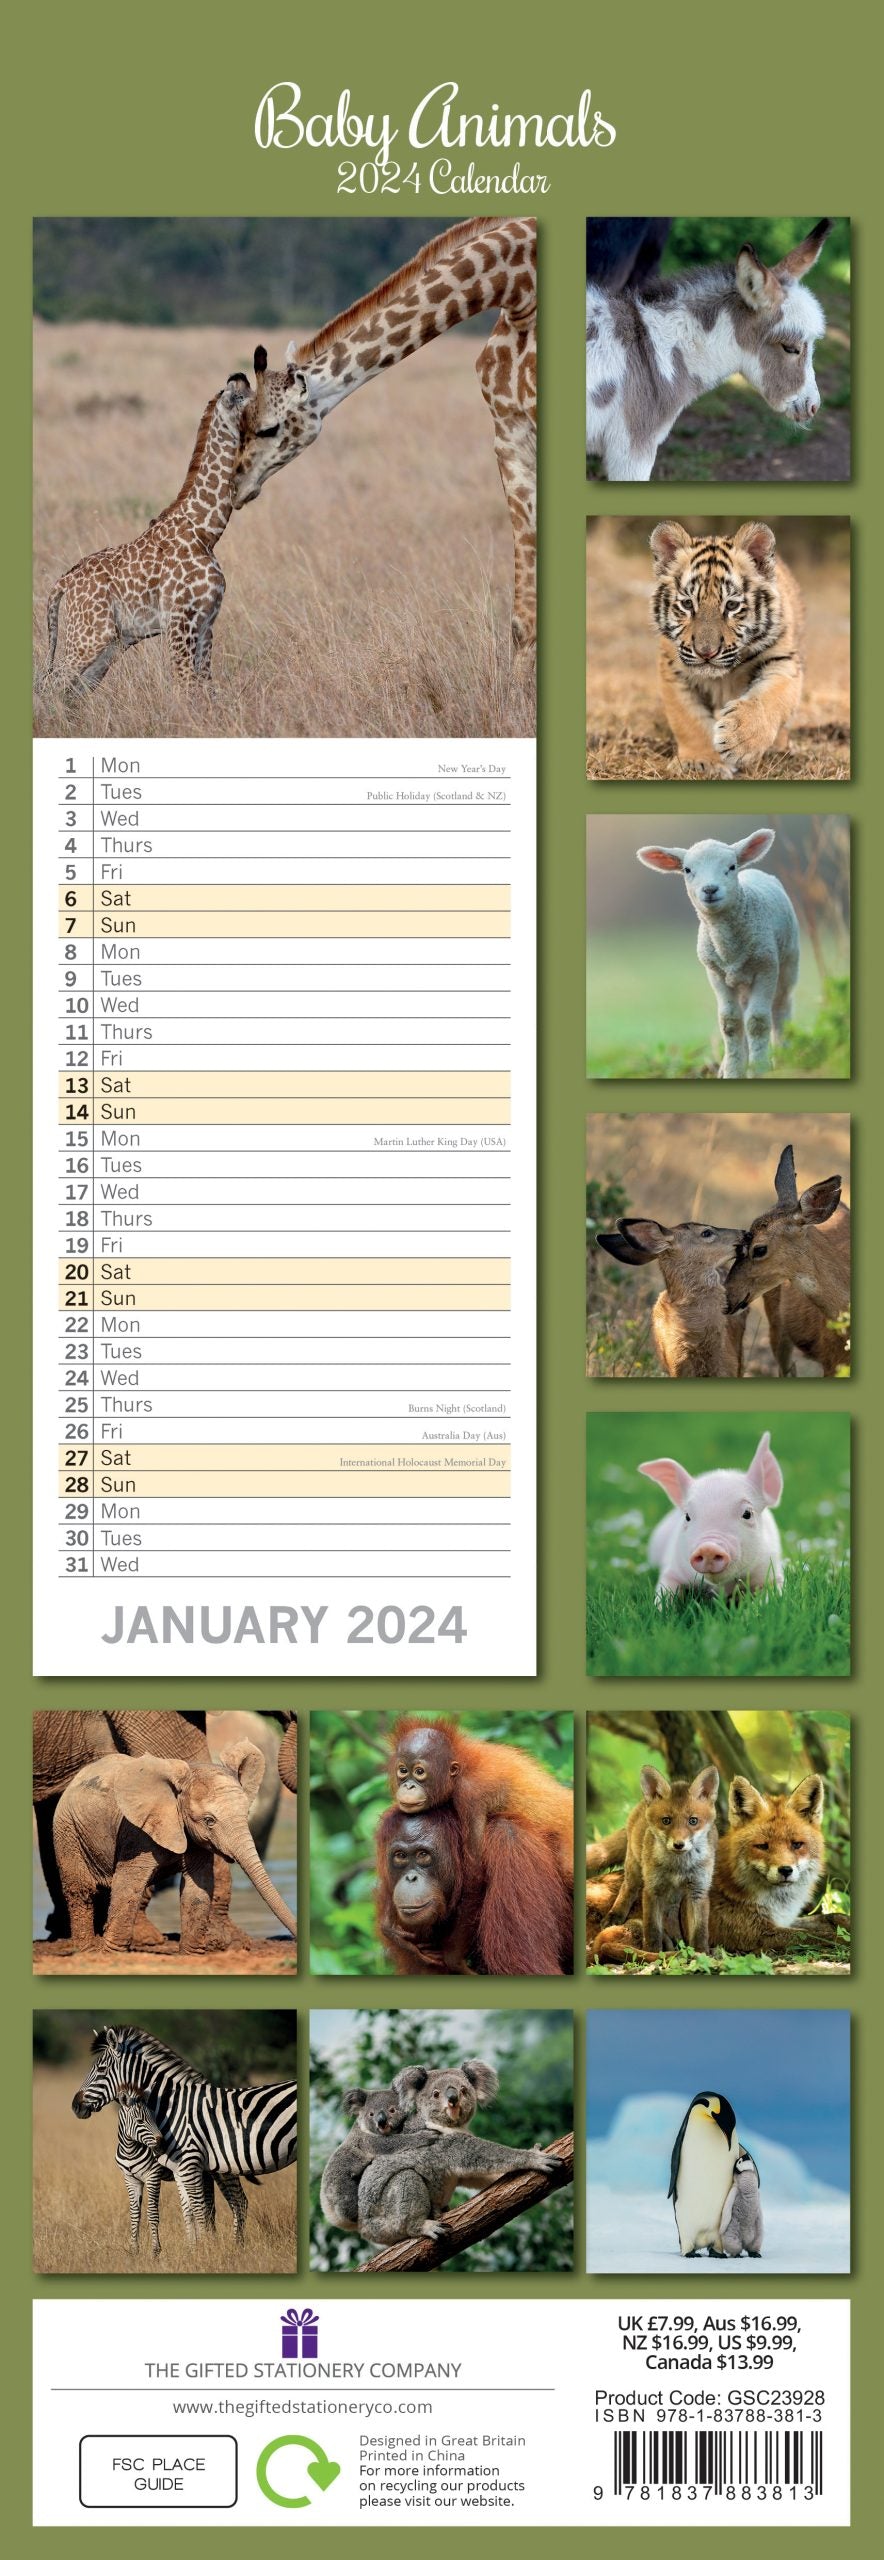 Baby Animals - 2024 Slimline Slim Wall Calendar Hanging Planner New Year Gift